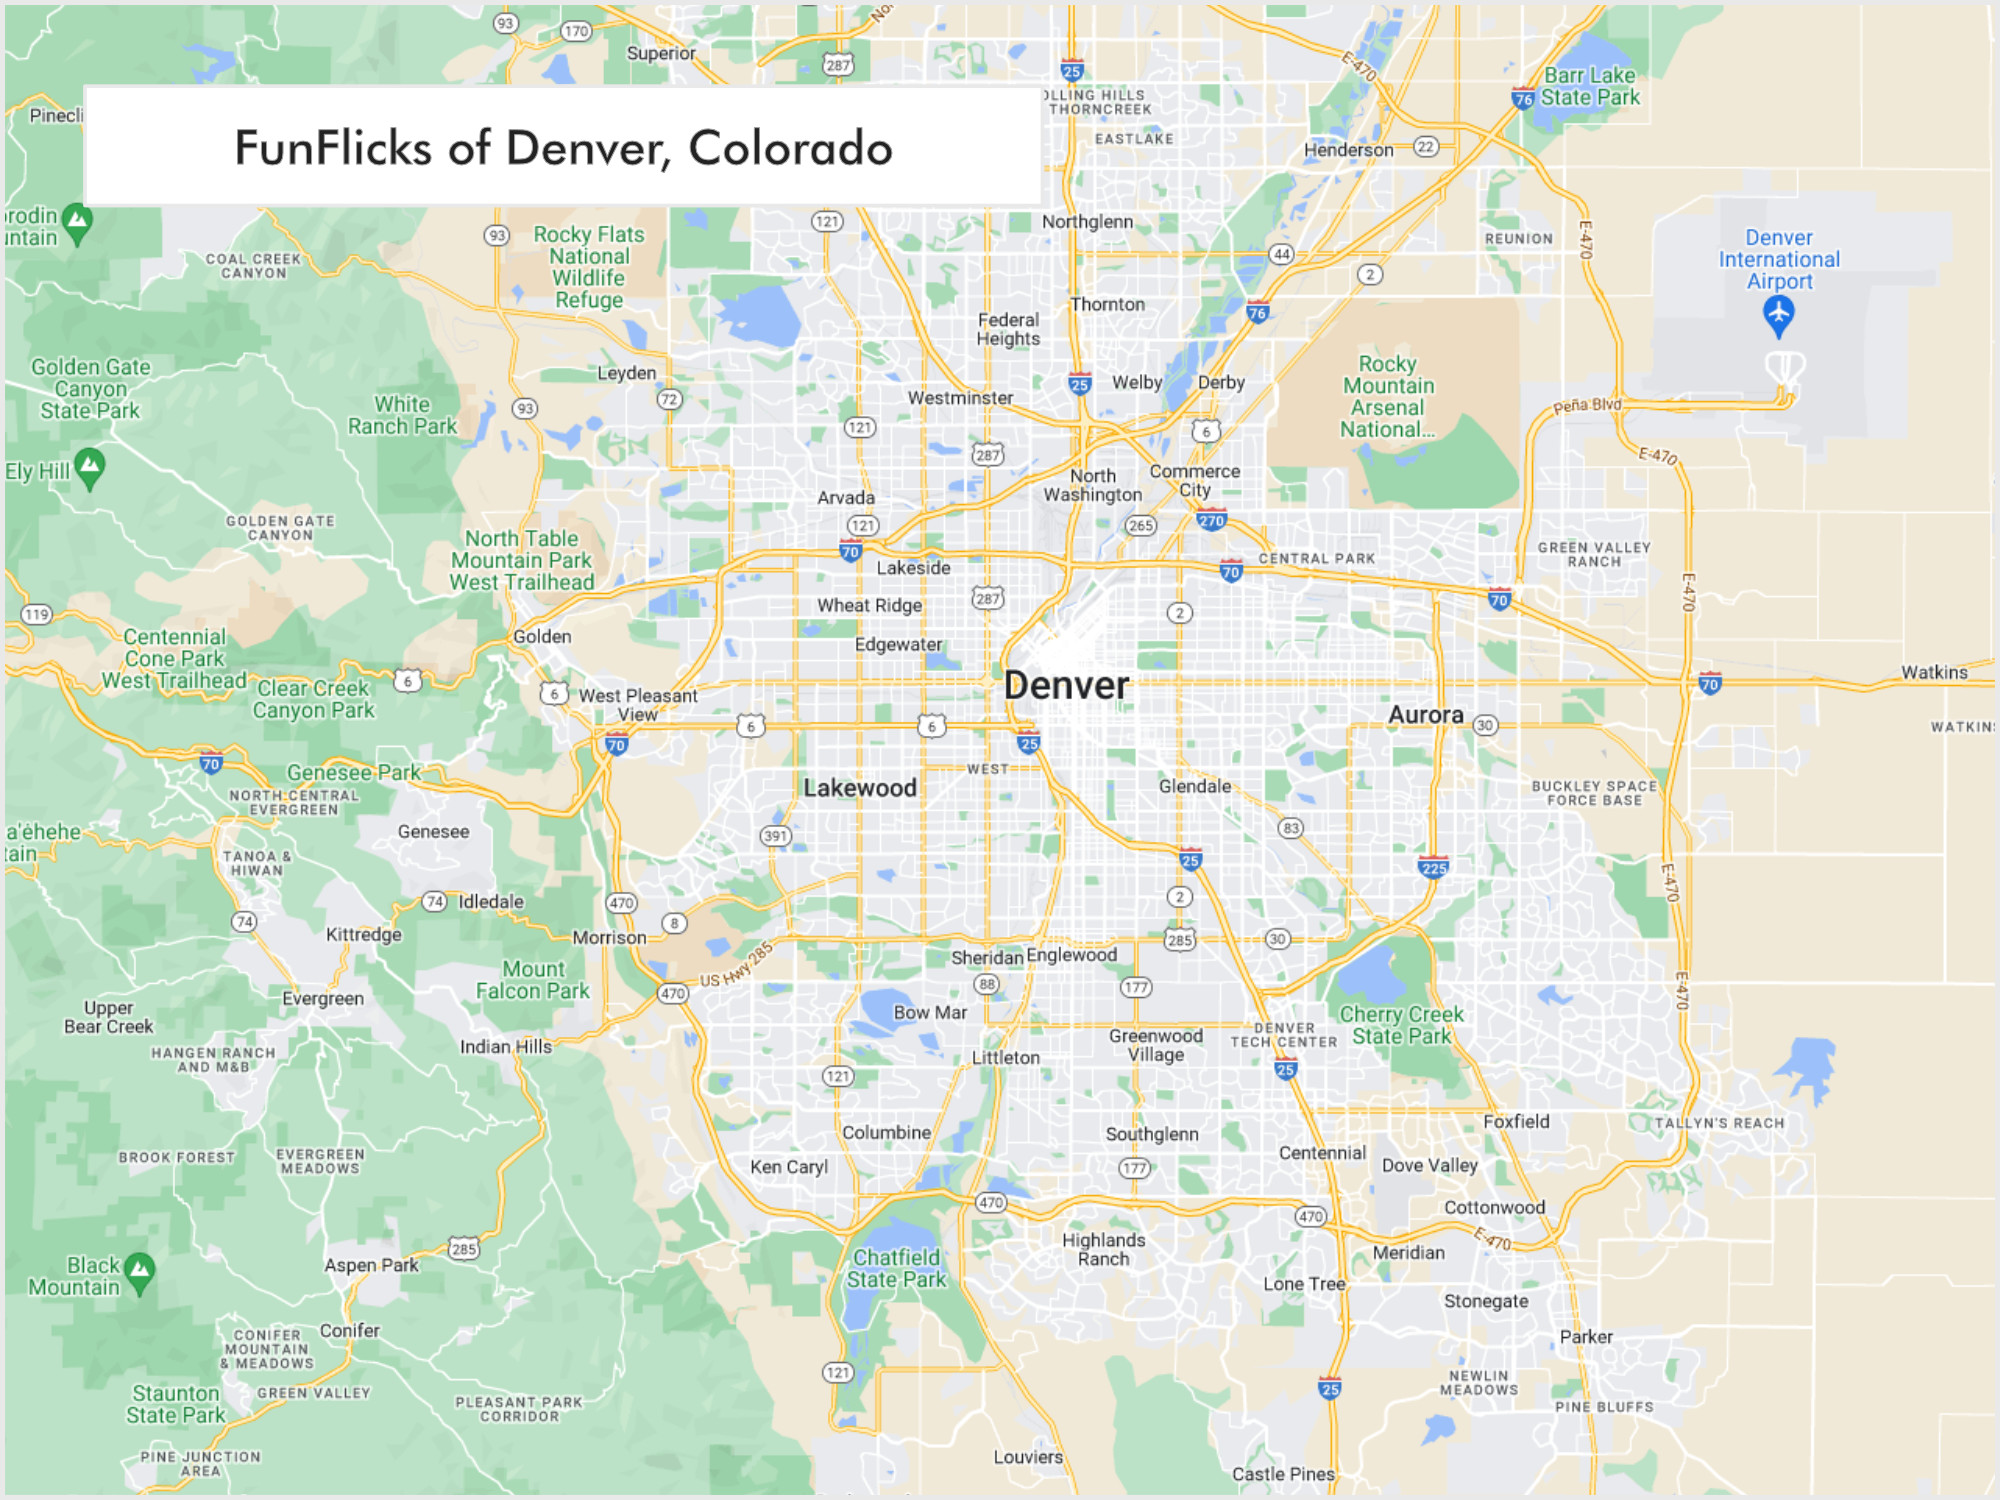 FunFlicks® Denver territory map